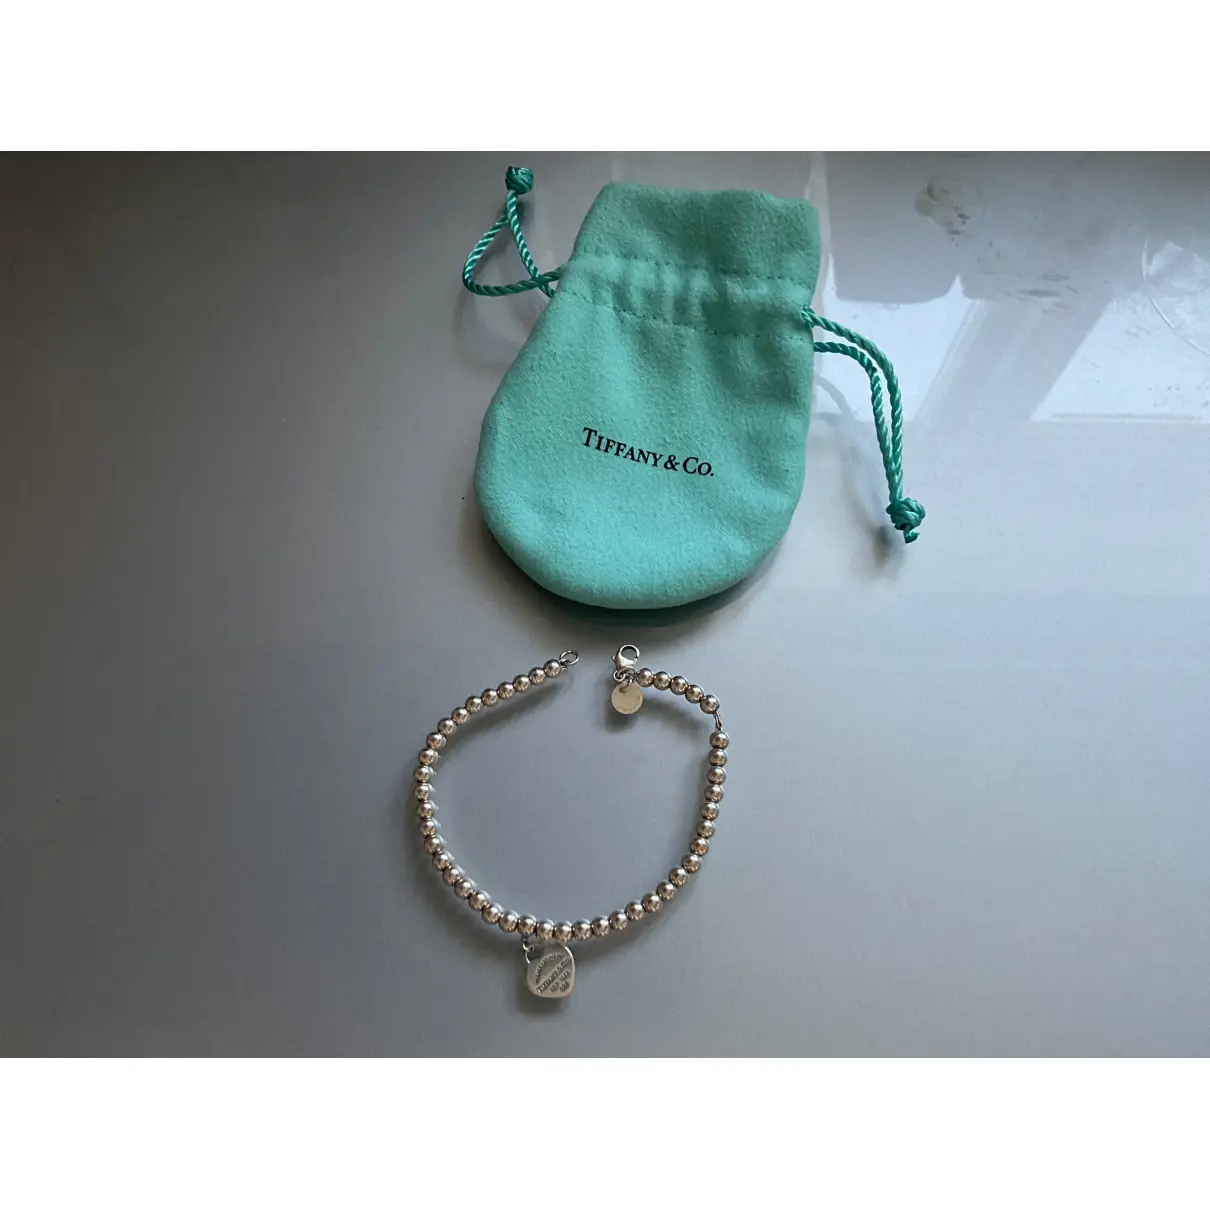 Buy Tiffany & Co Return to Tiffany silver bracelet online